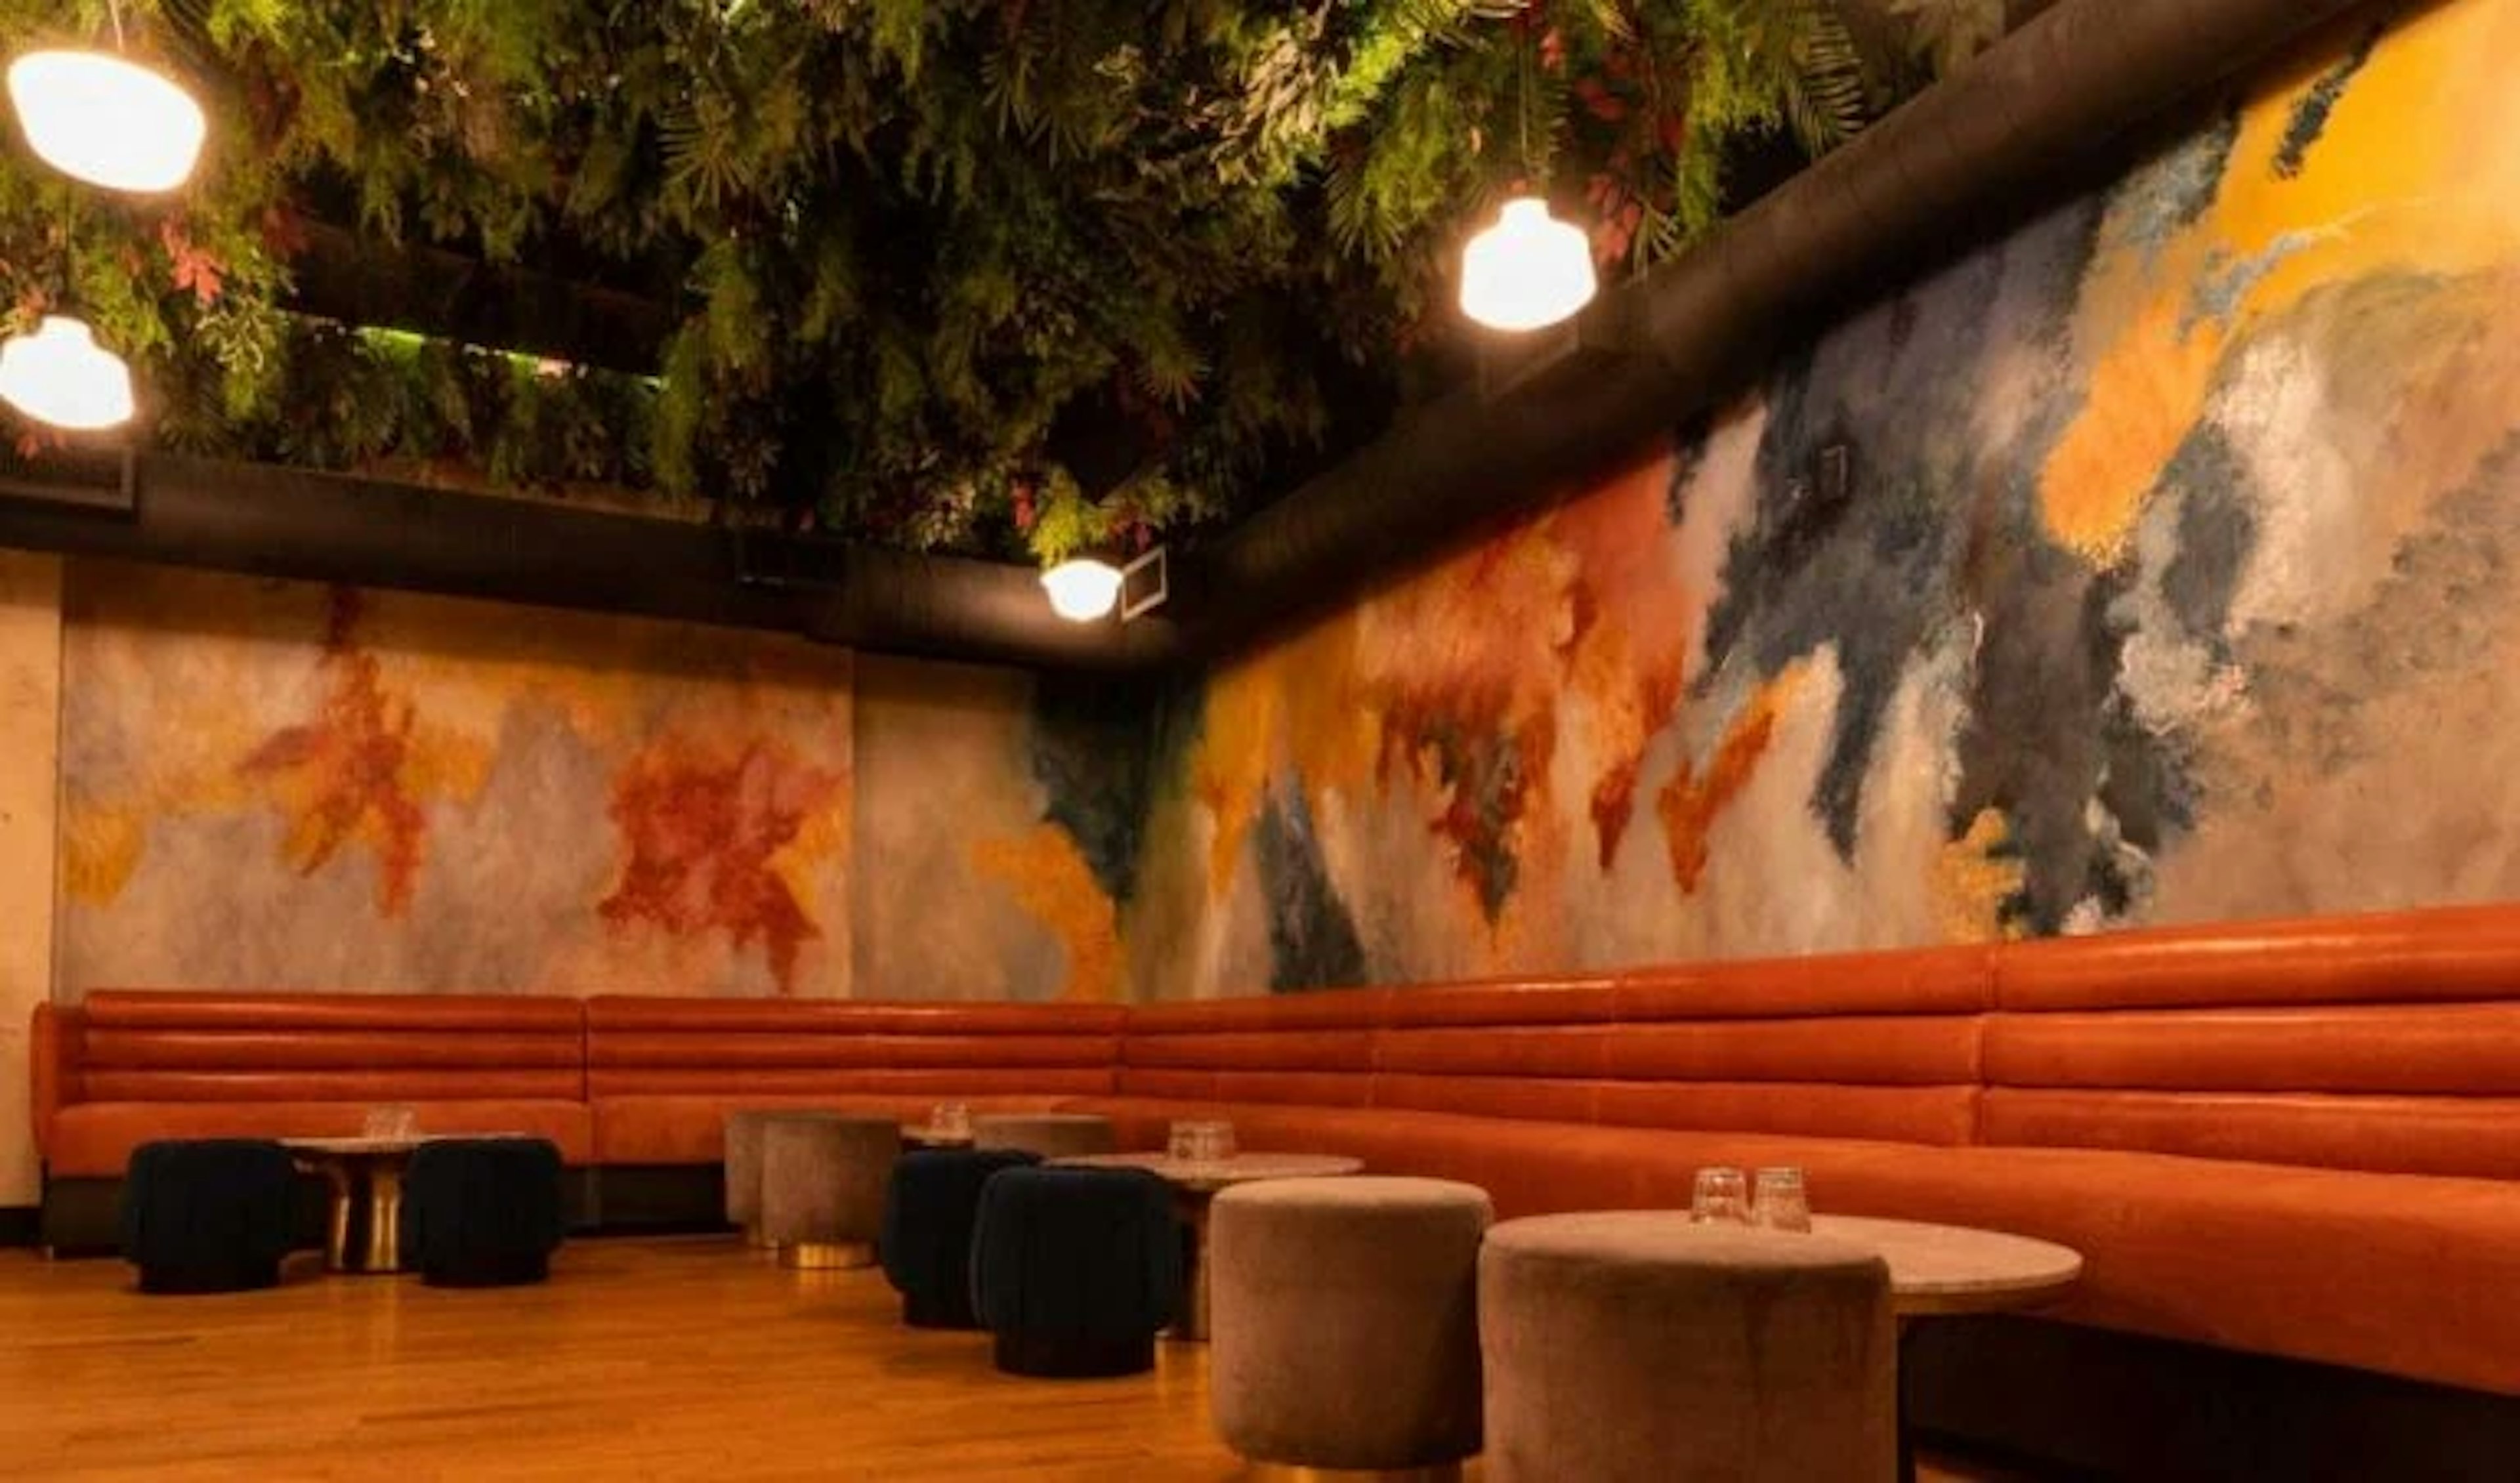 Lobby Bar Restaurant | Private & Corporate Events Toronto | MEzzanine Image